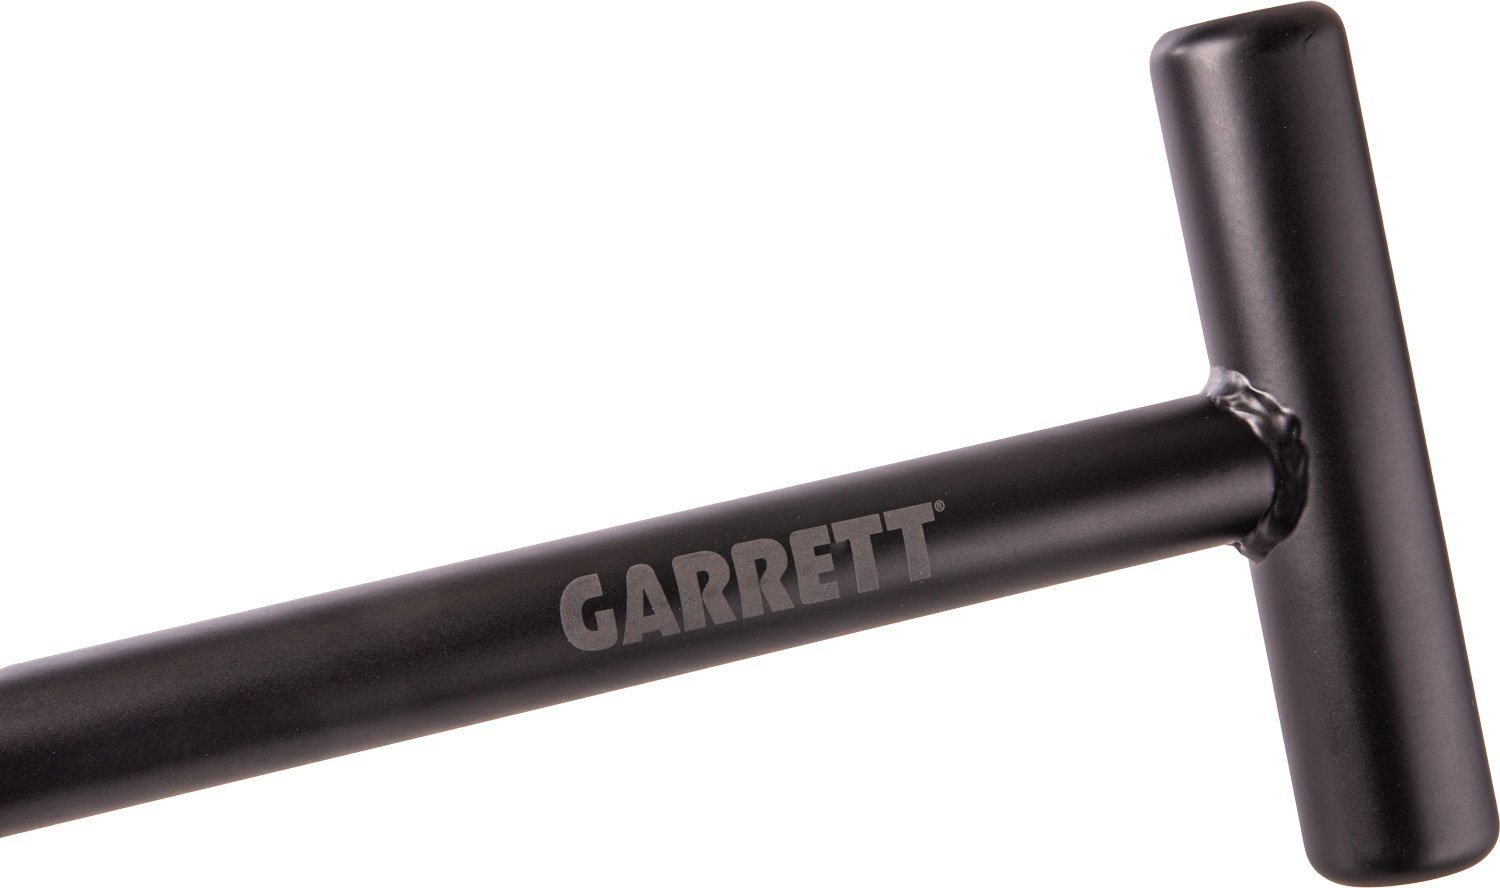 t handle garrett razor metal detecting relic shovel